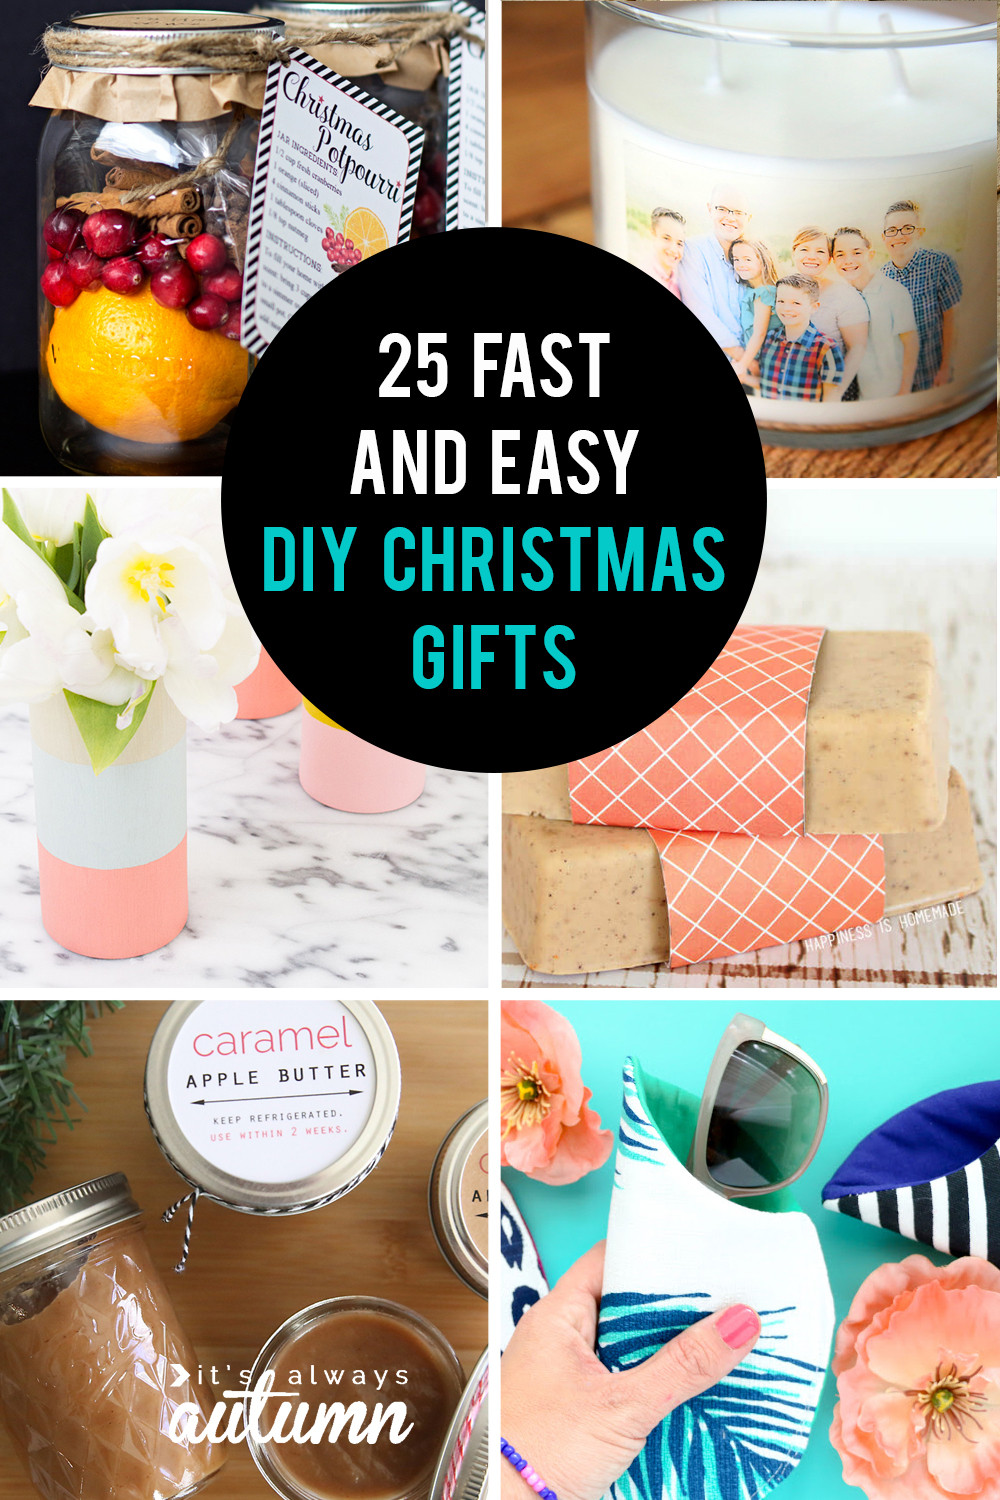 Good DIY Christmas Gifts
 25 easy homemade Christmas ts you can make in 15